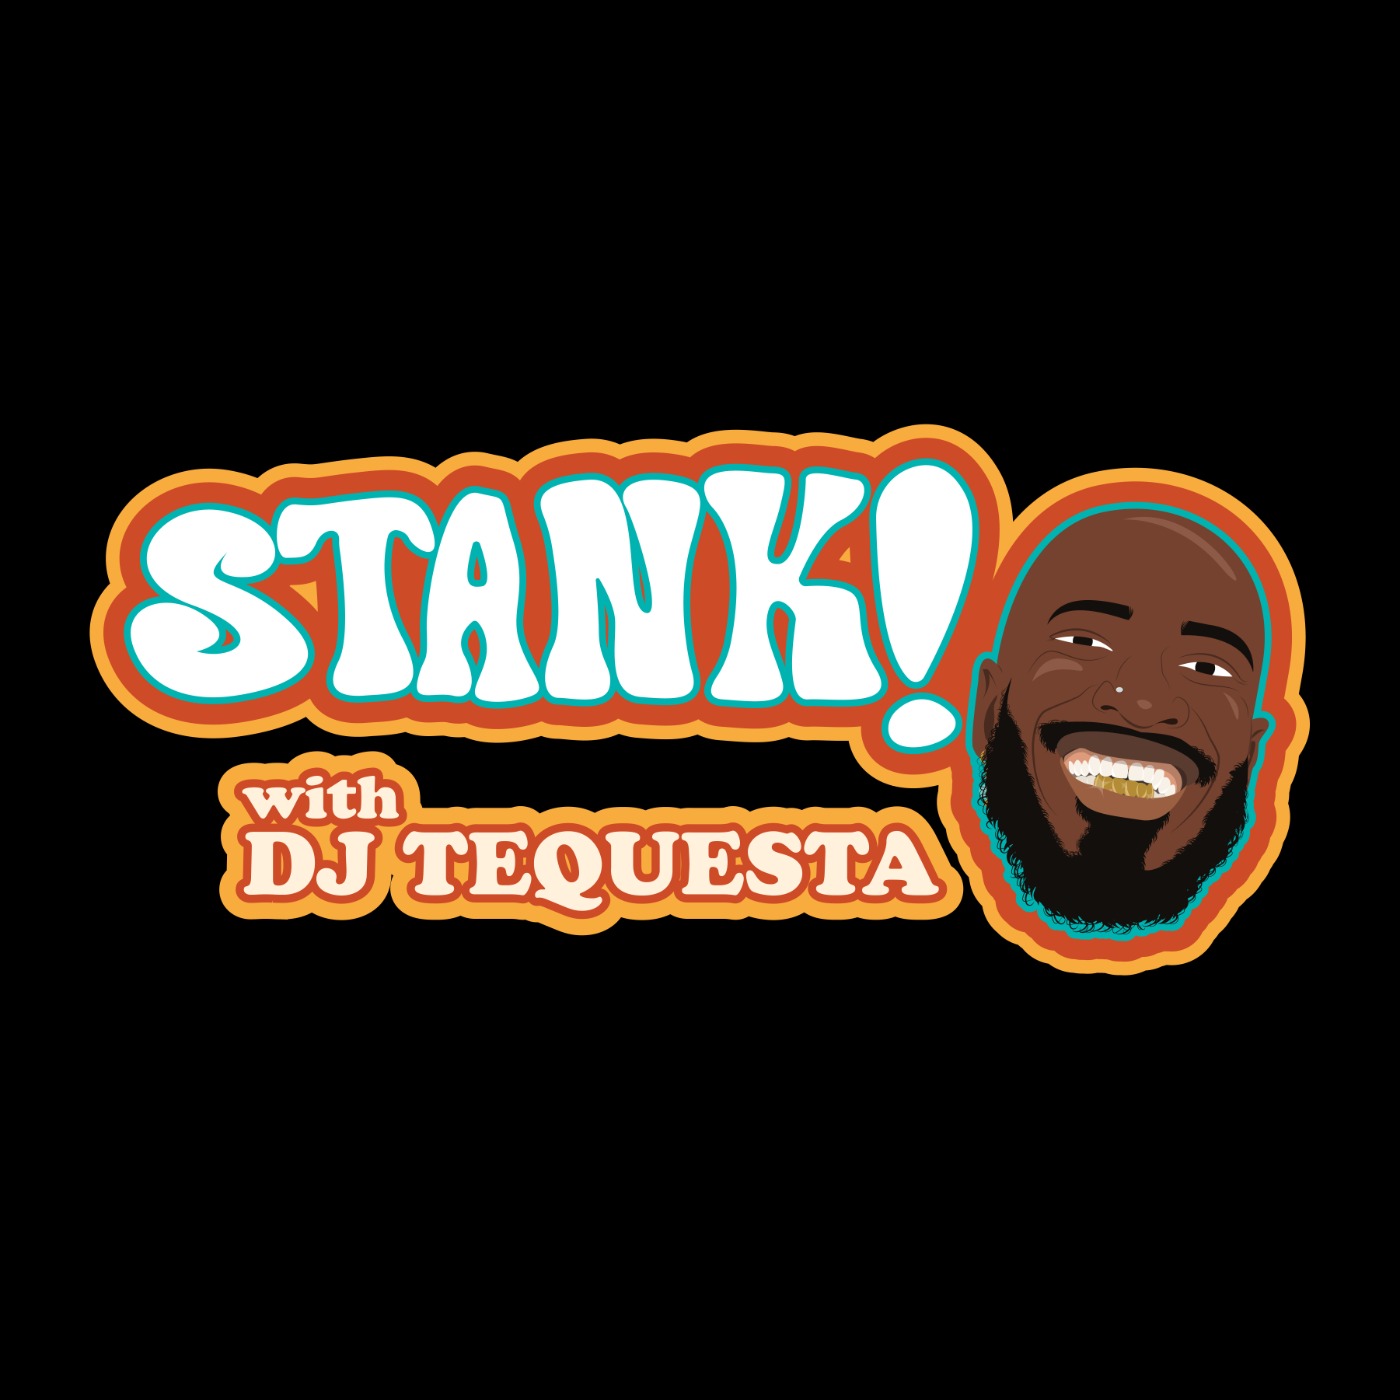 Stank! with DJ Tequesta